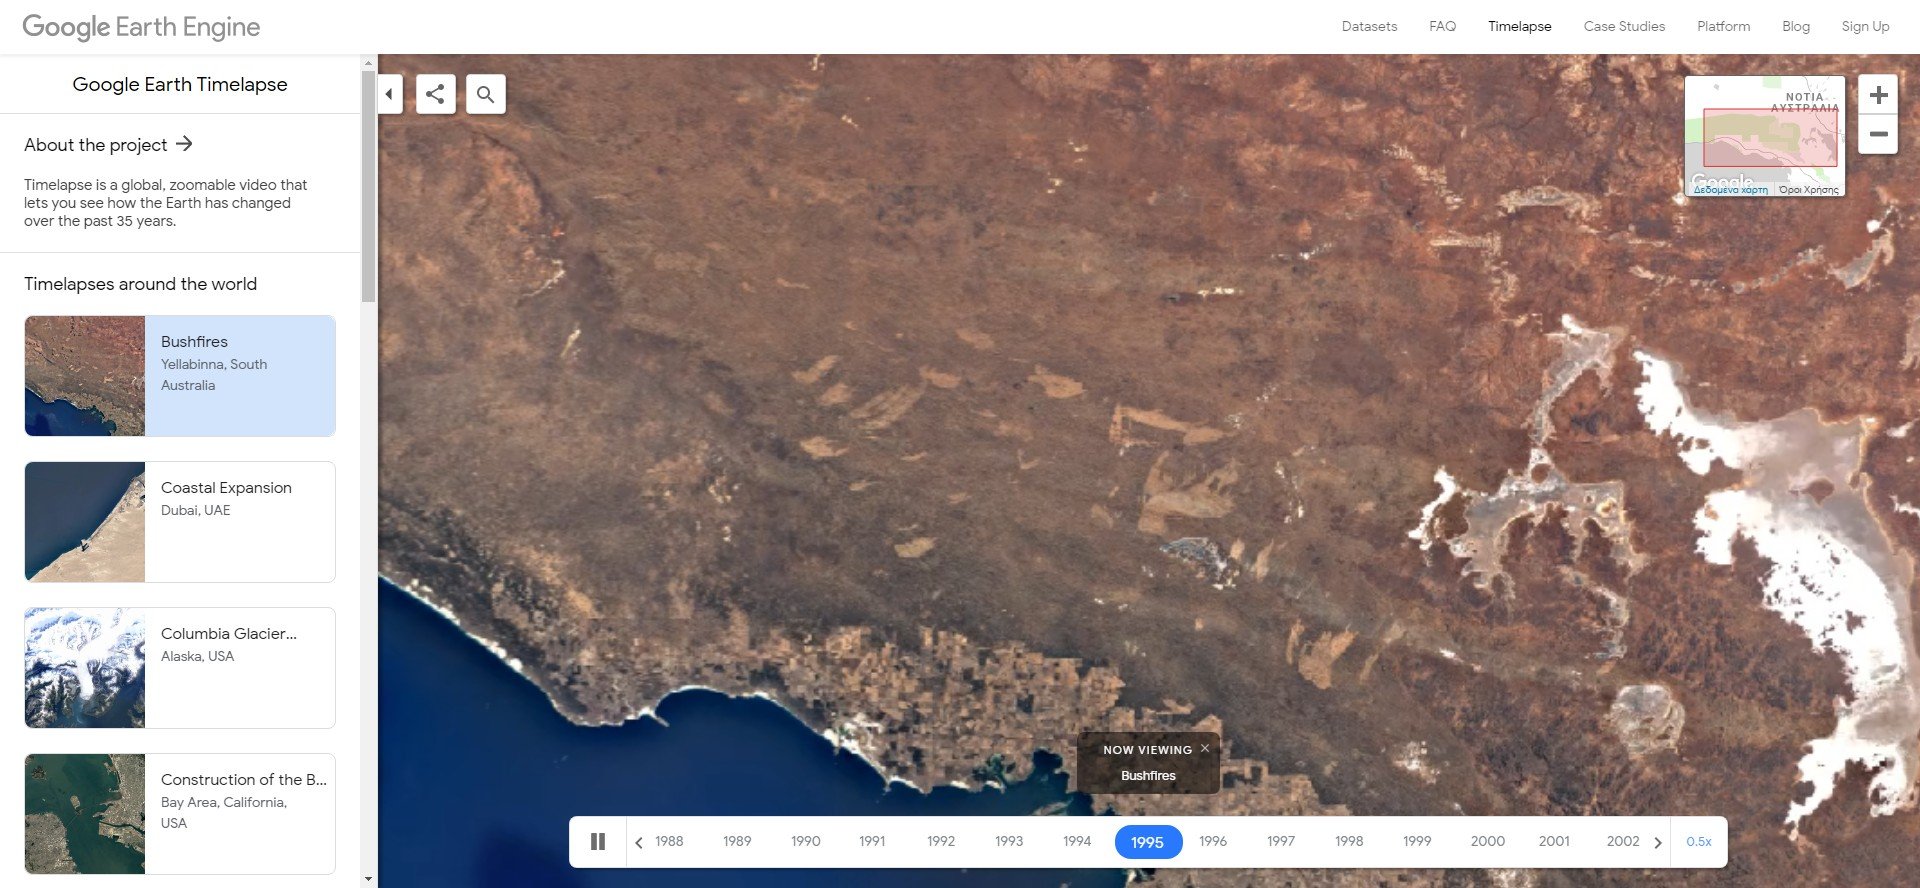 More information about "Google Earth Timelapse: Πόσο άλλαξε ο πλανήτης από το 1984 ως σήμερα"